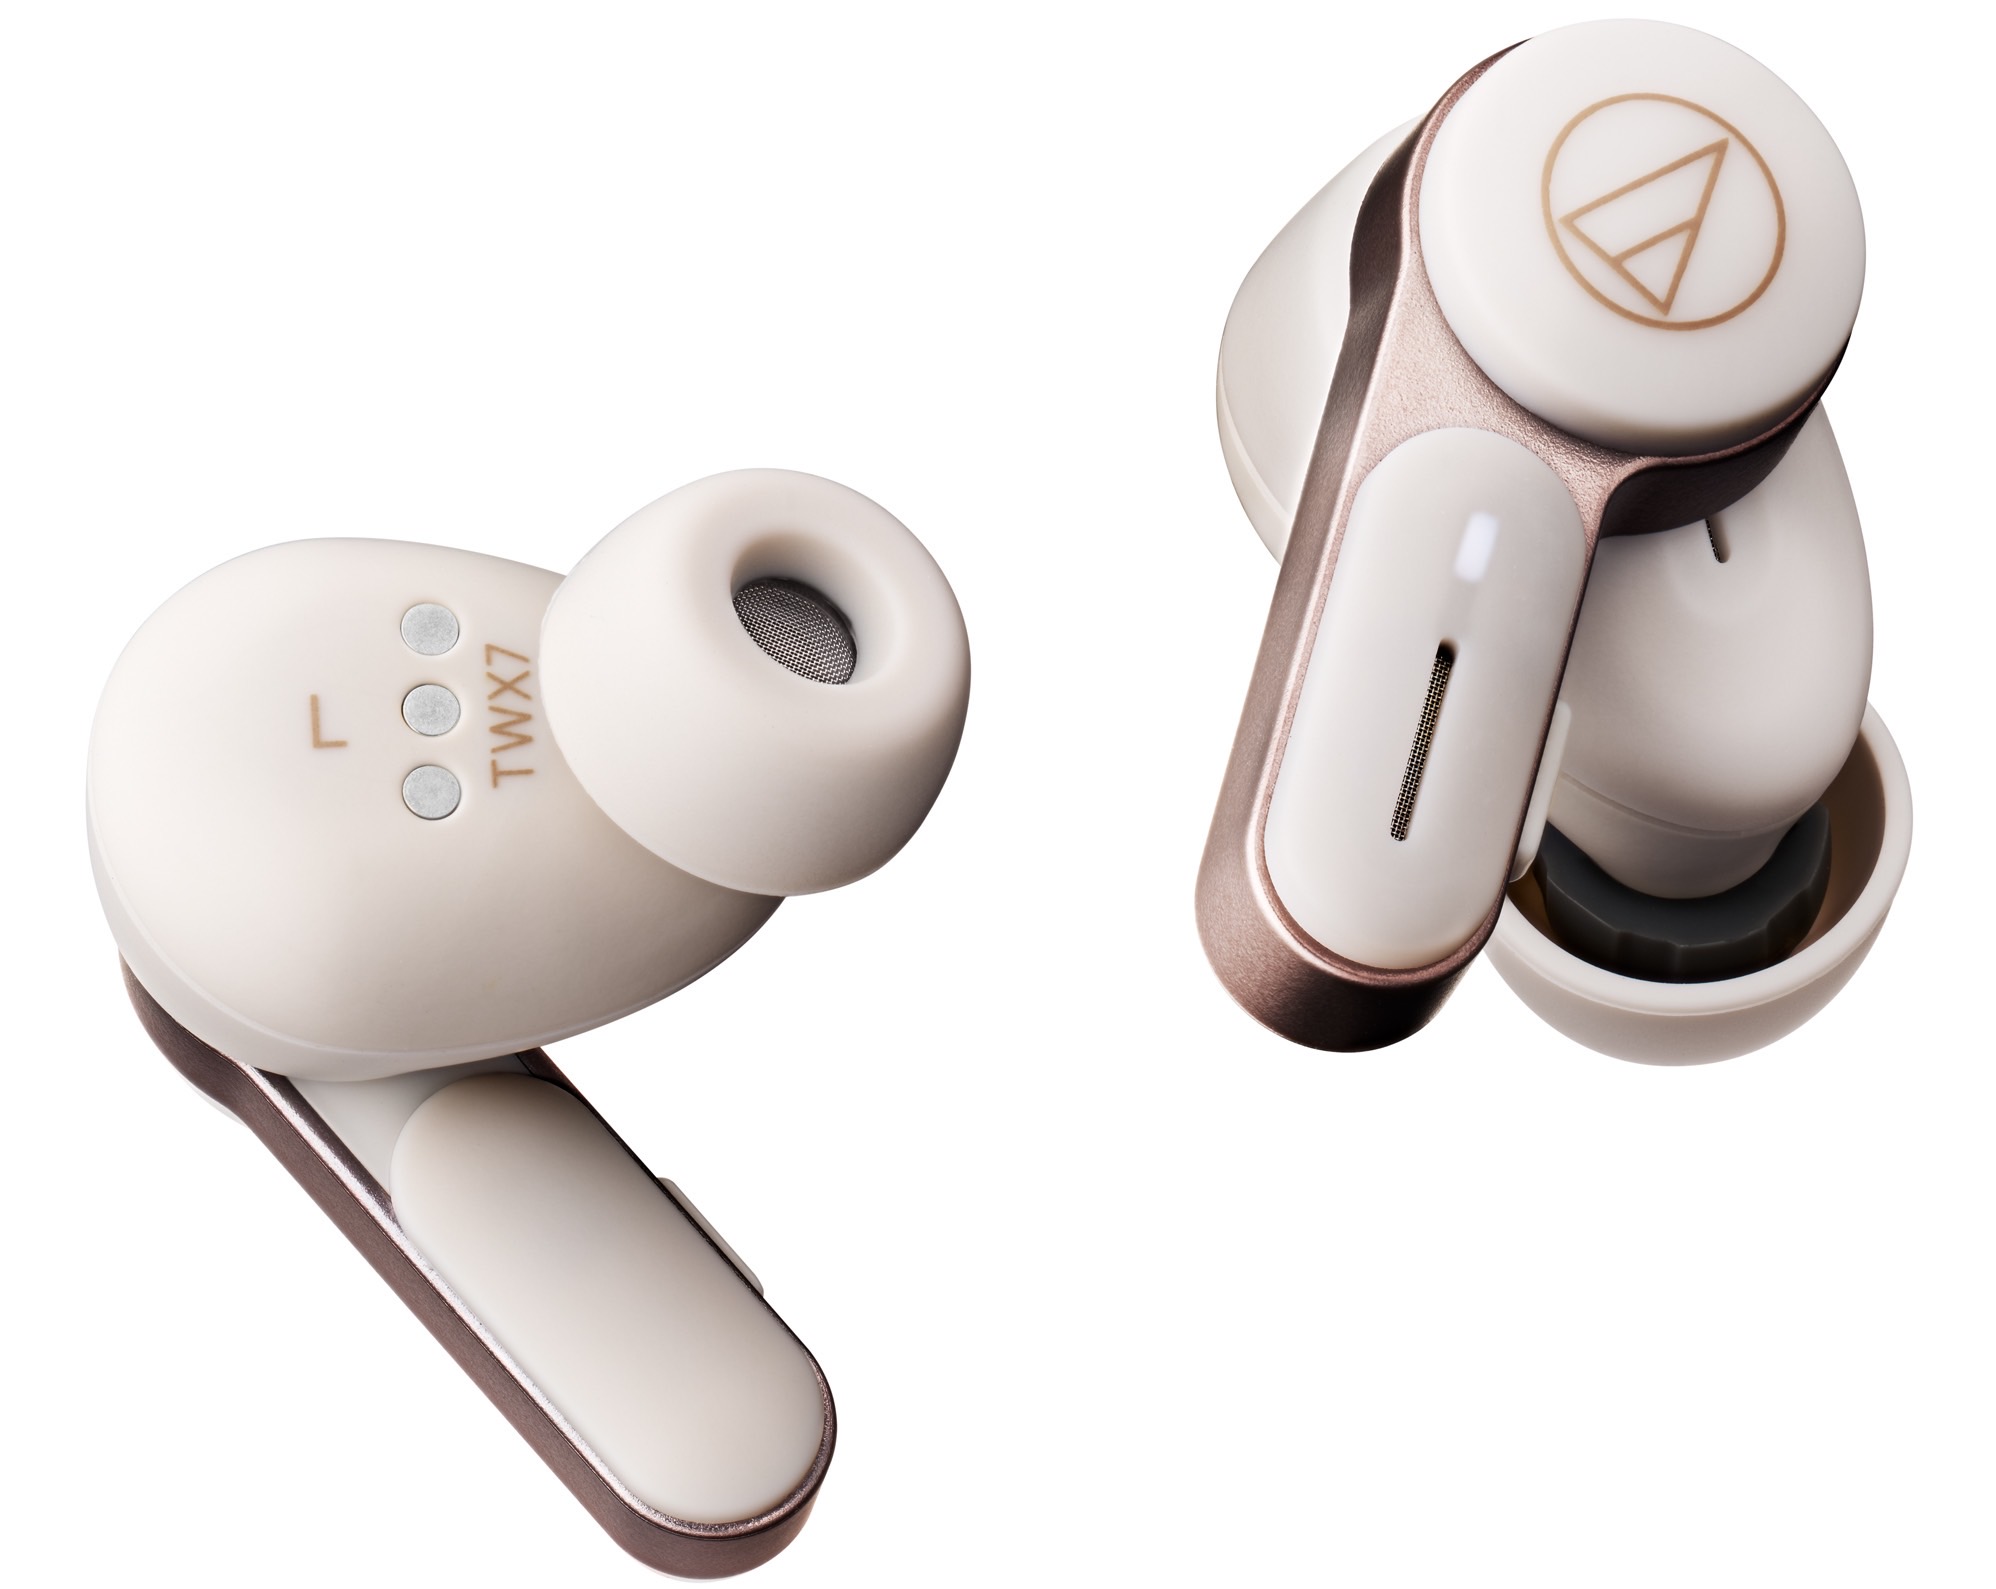 Audio-Technica ATH-TWX7 wireless earbuds.